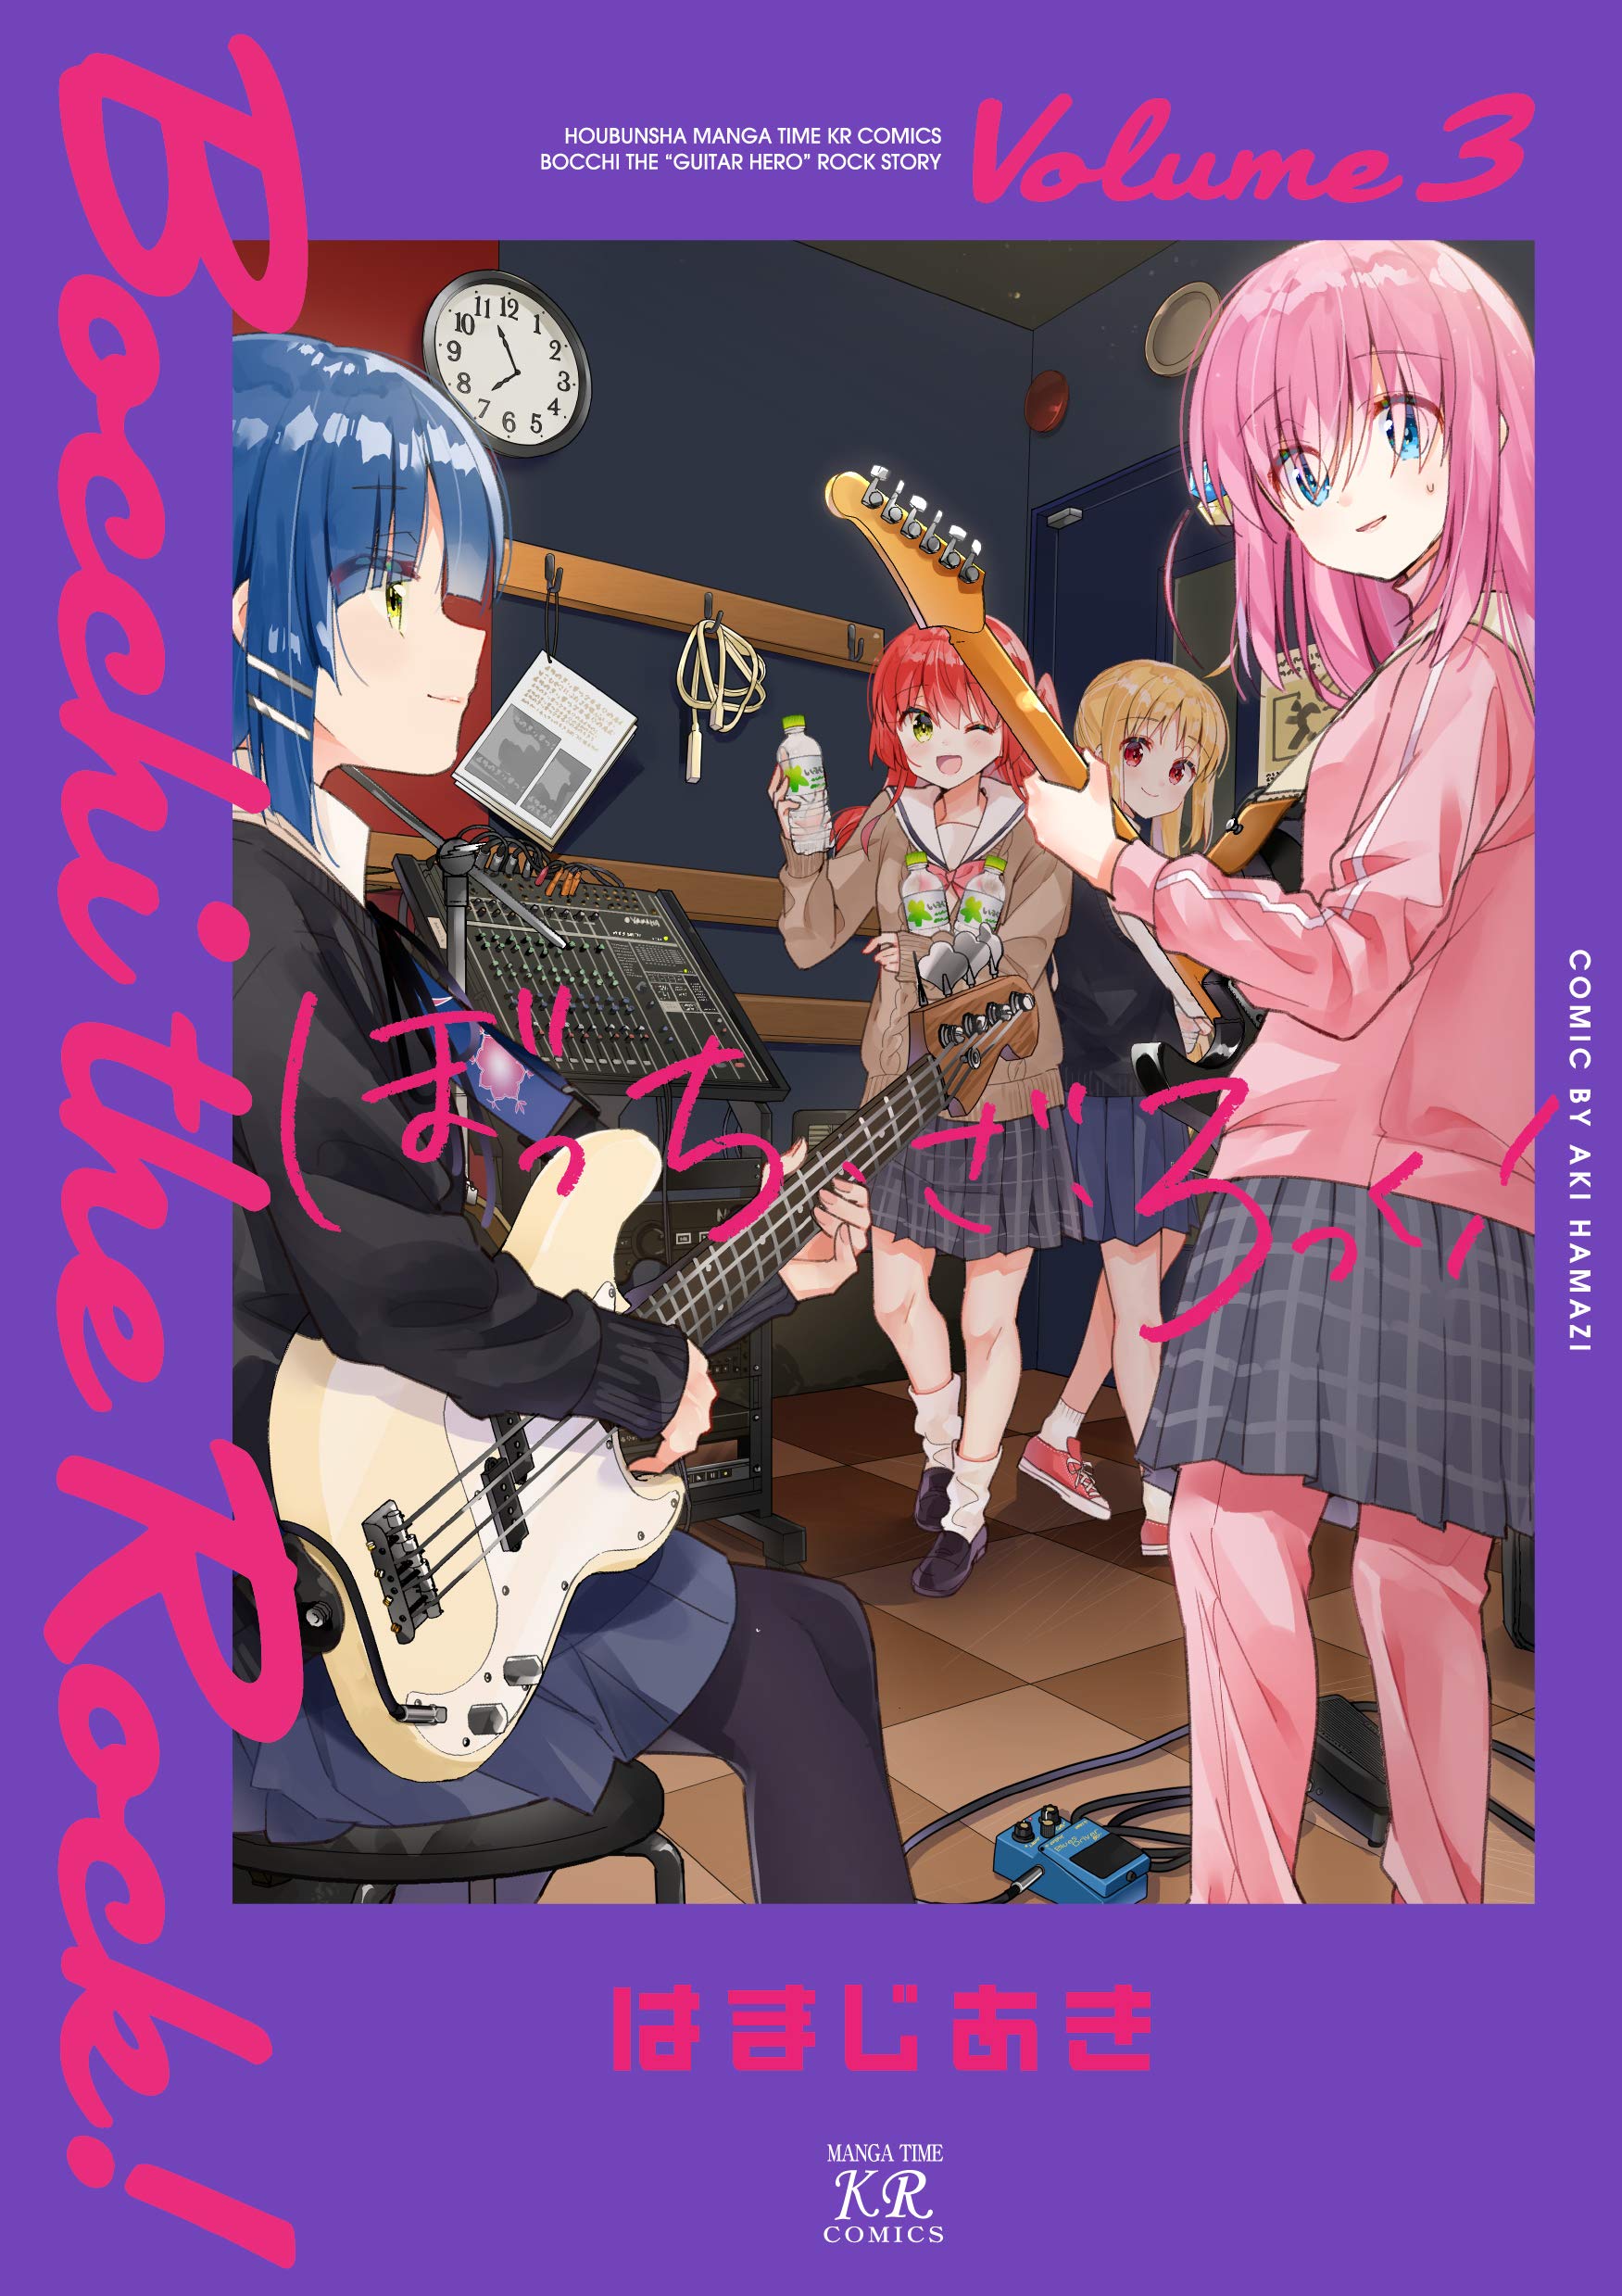 Bocchi the Rock! Japanese manga volume 3 front cover